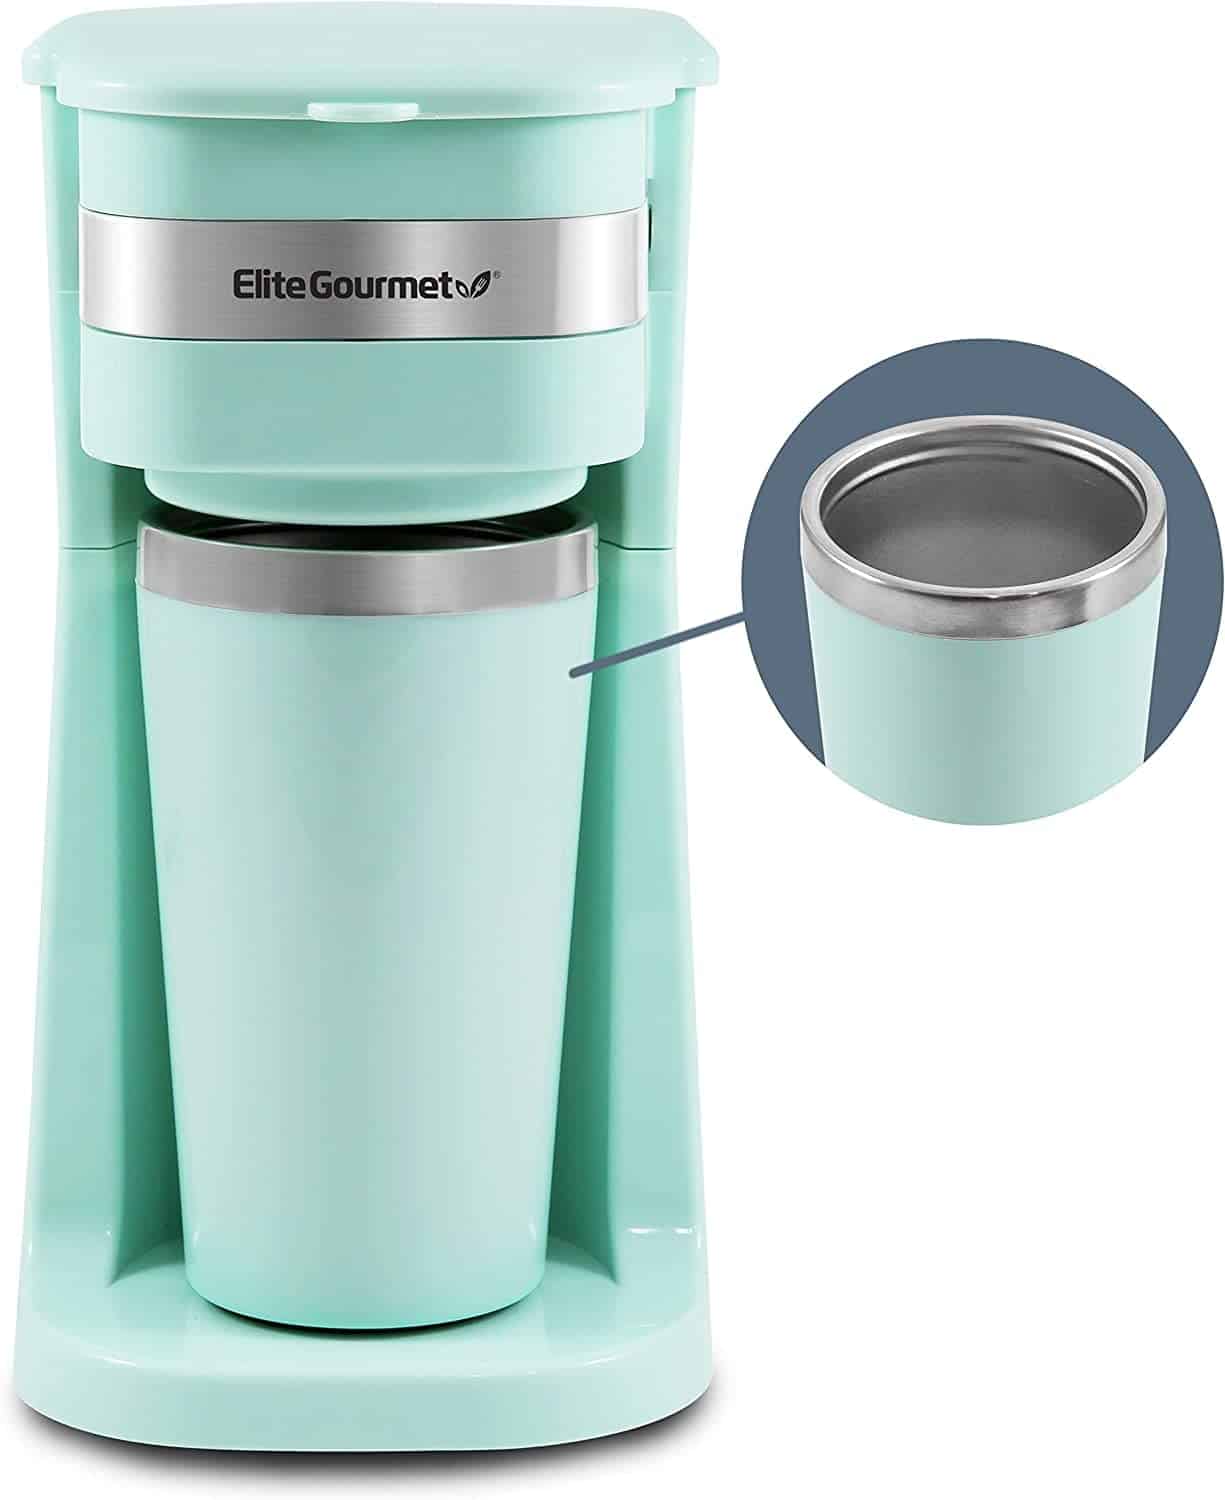 elite-gourmet-coffee-maker-green